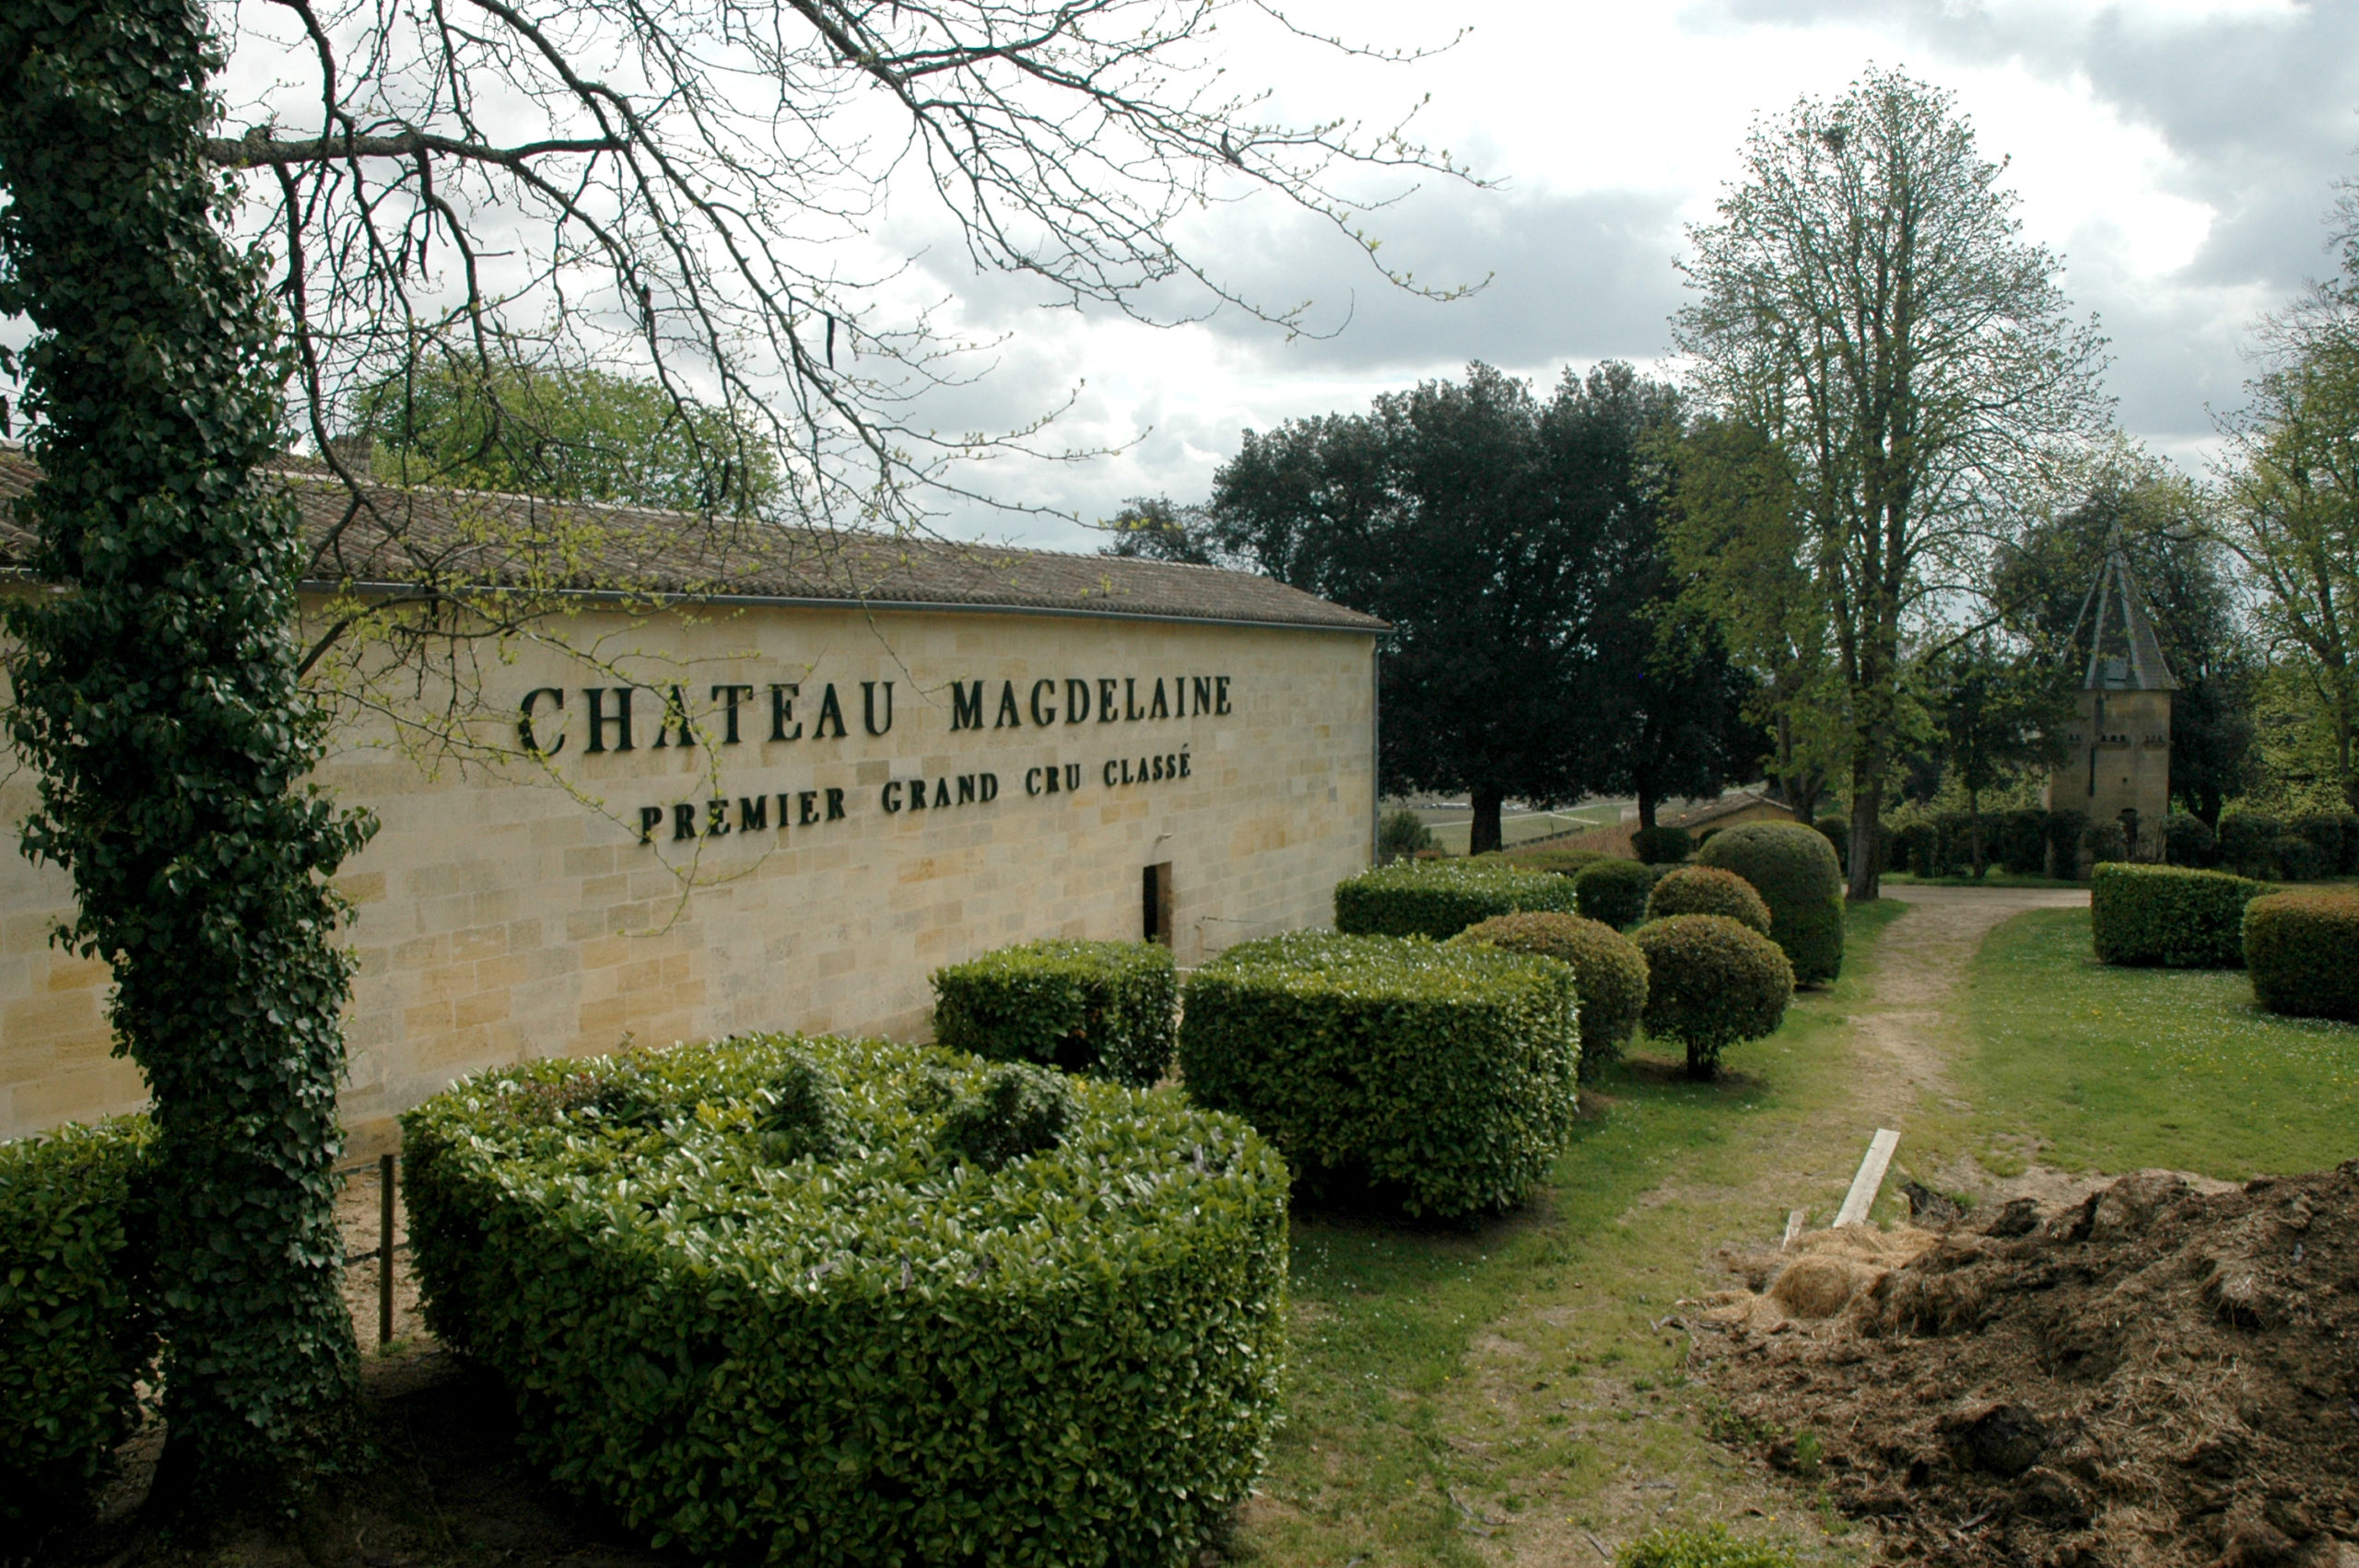 Chateau Magdelaine